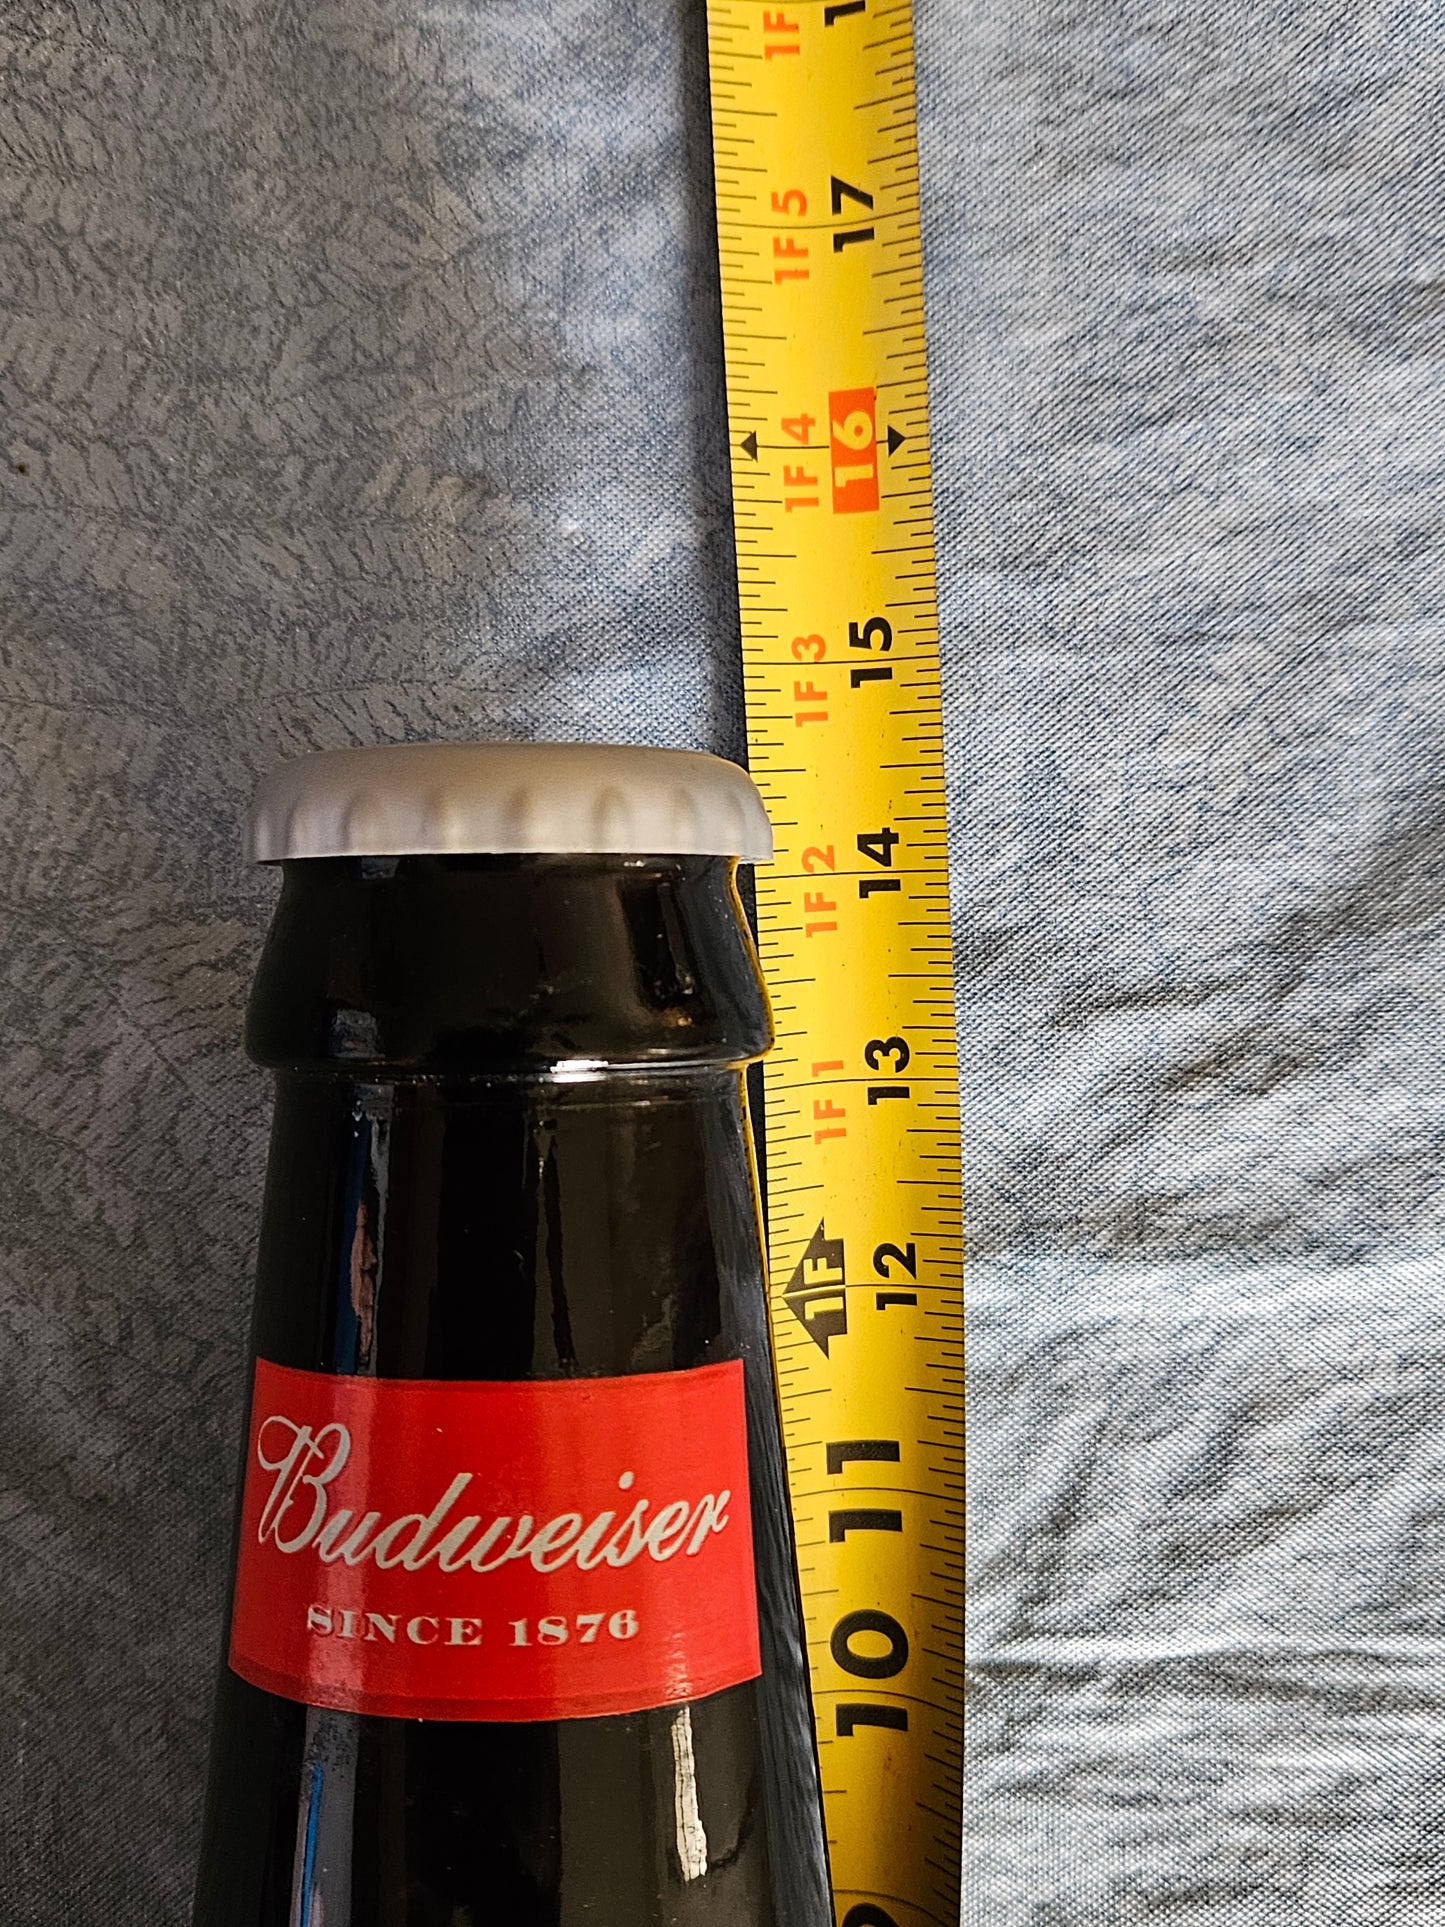 Budweiser ~ Giant 14.5" ~ Millennium Limited Edition Glass Bottle ~ Display/Bank